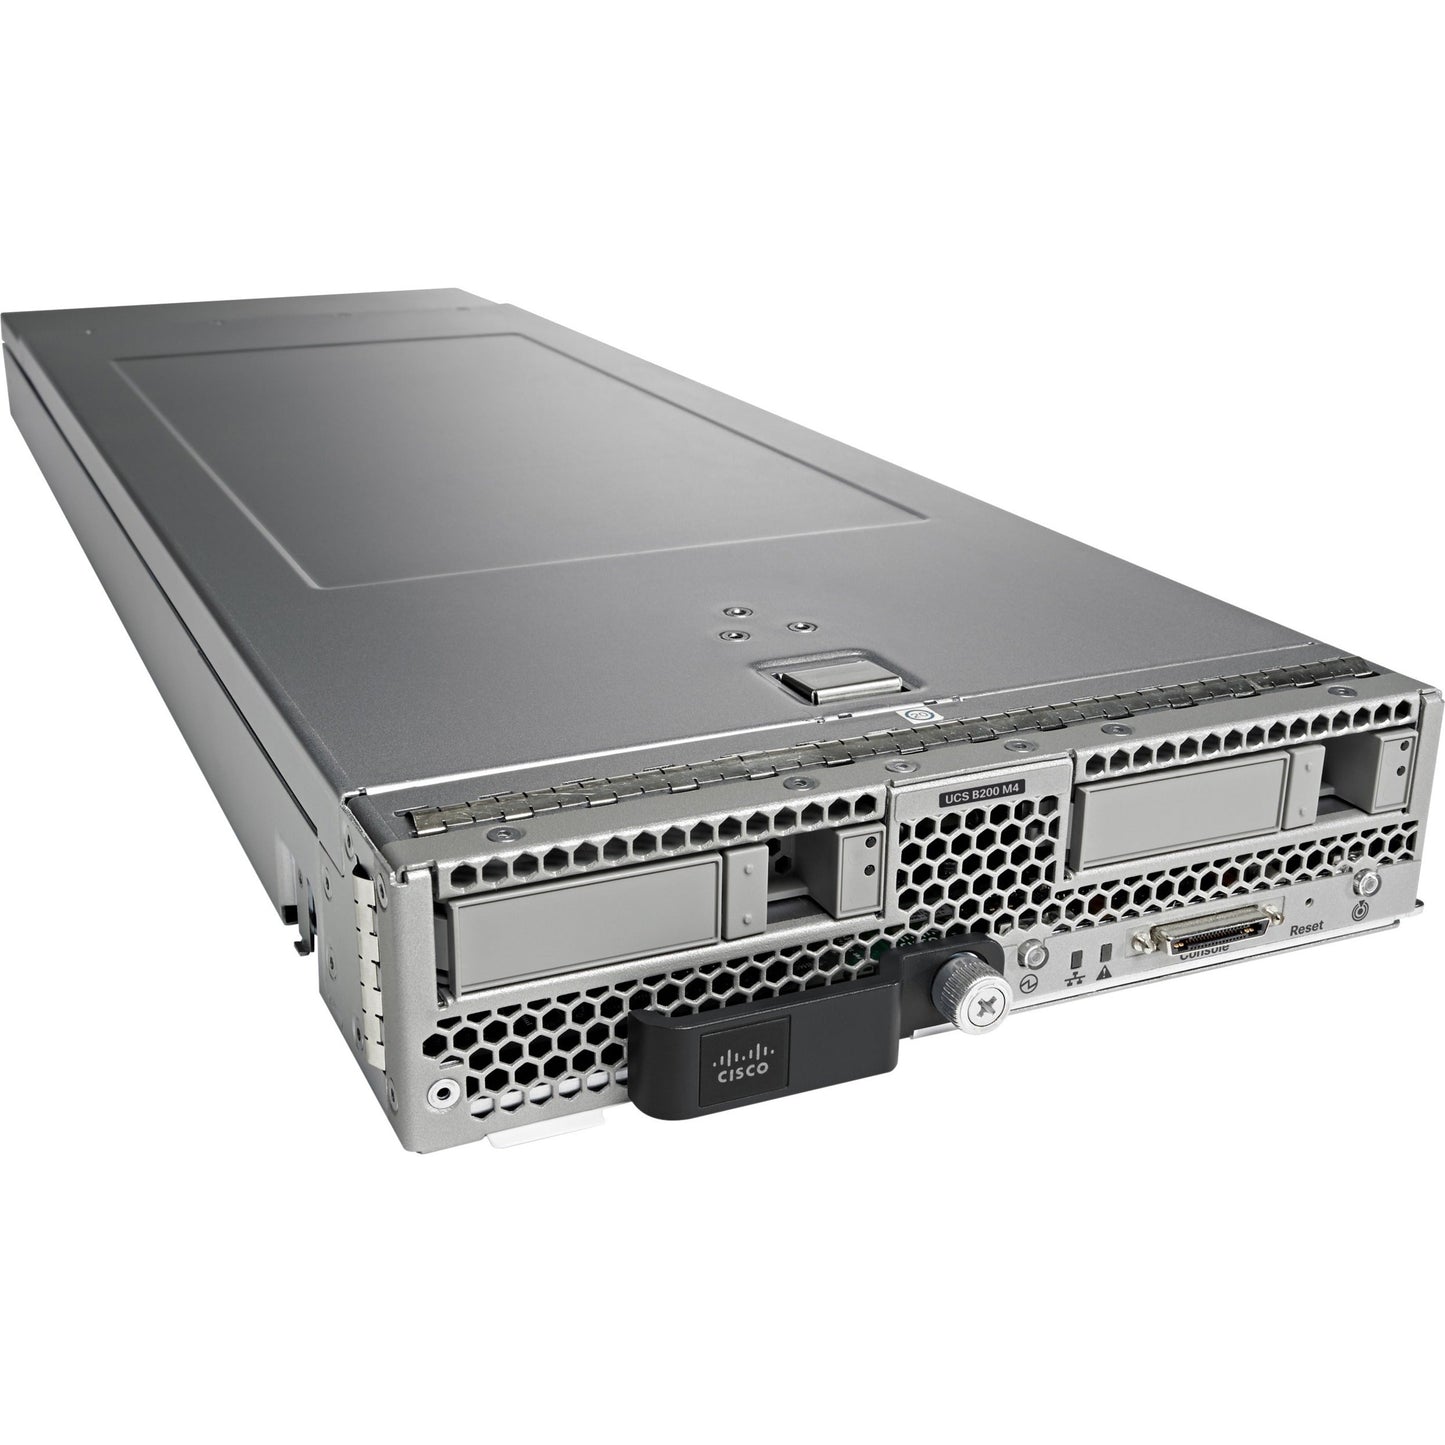 Cisco B200 M4 Blade Server - 2 x Intel Xeon E5-2670 v3 2.30 GHz - 256 GB RAM